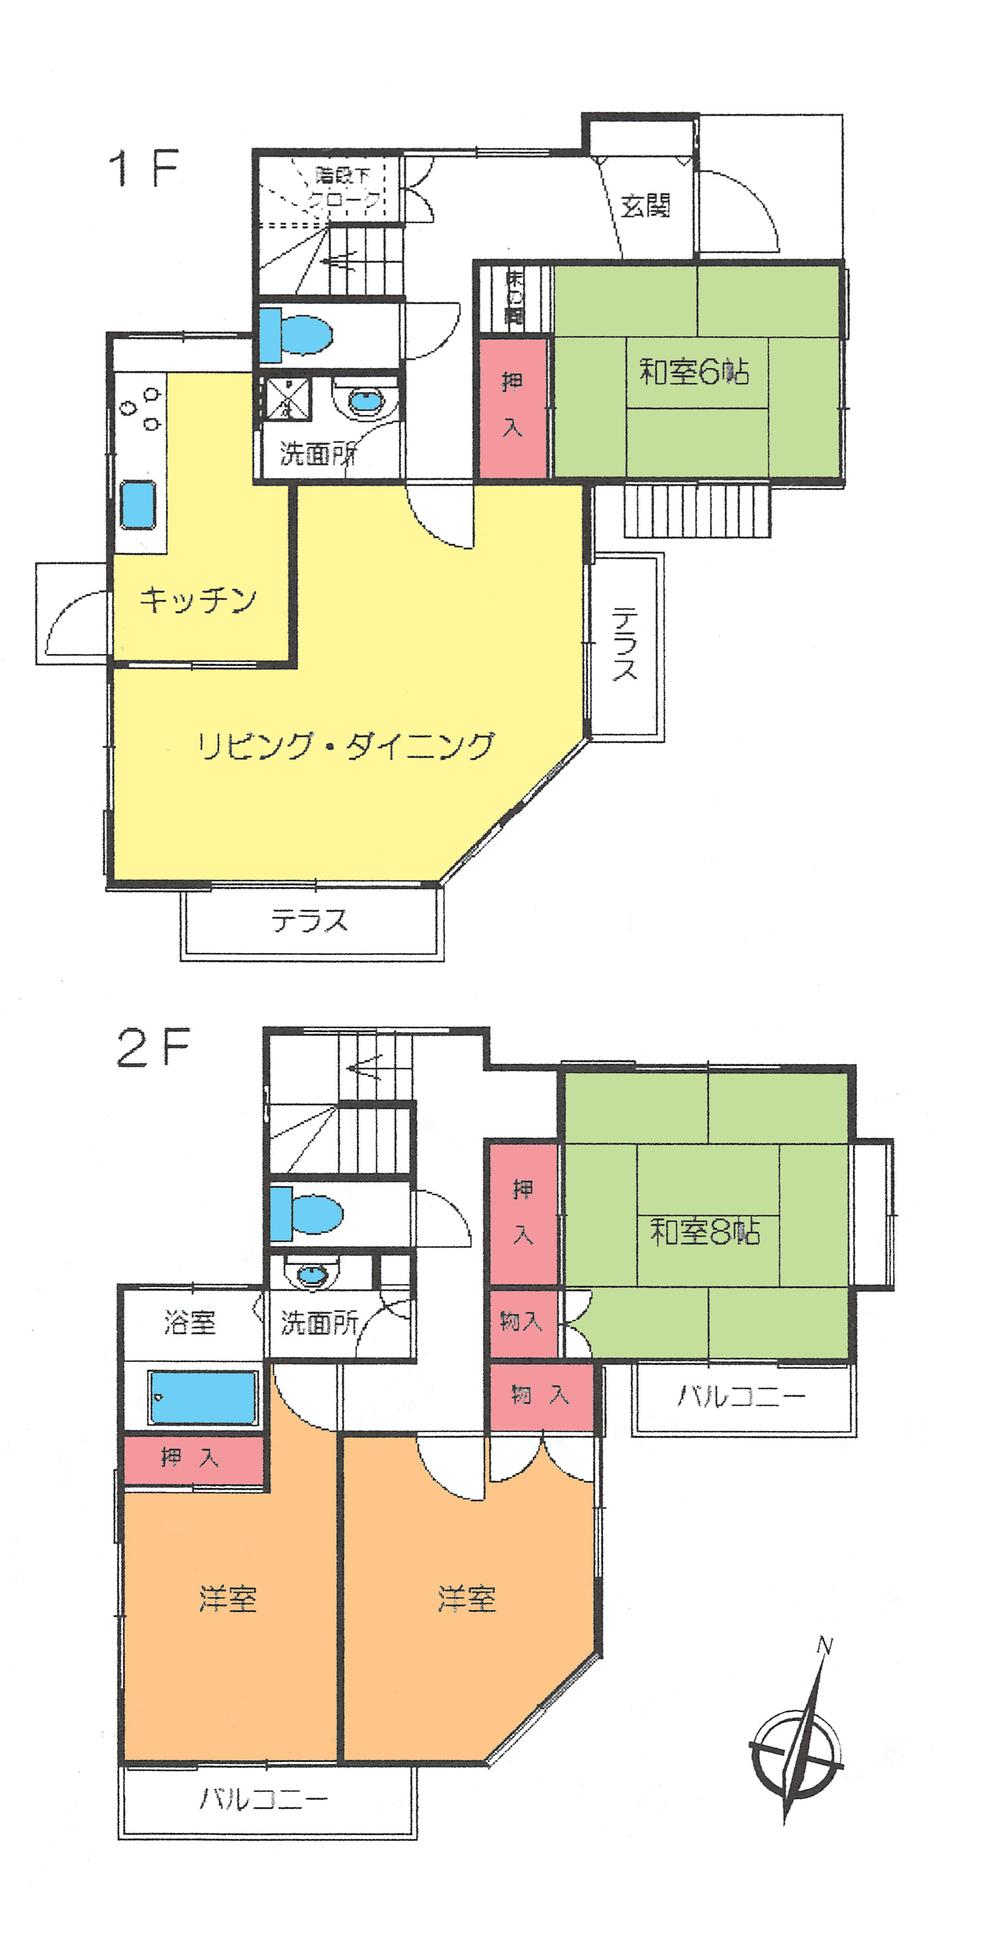 Floor plan. 16.5 million yen, 4LDK, Land area 175.08 sq m , Building area 115.72 sq m floor plan